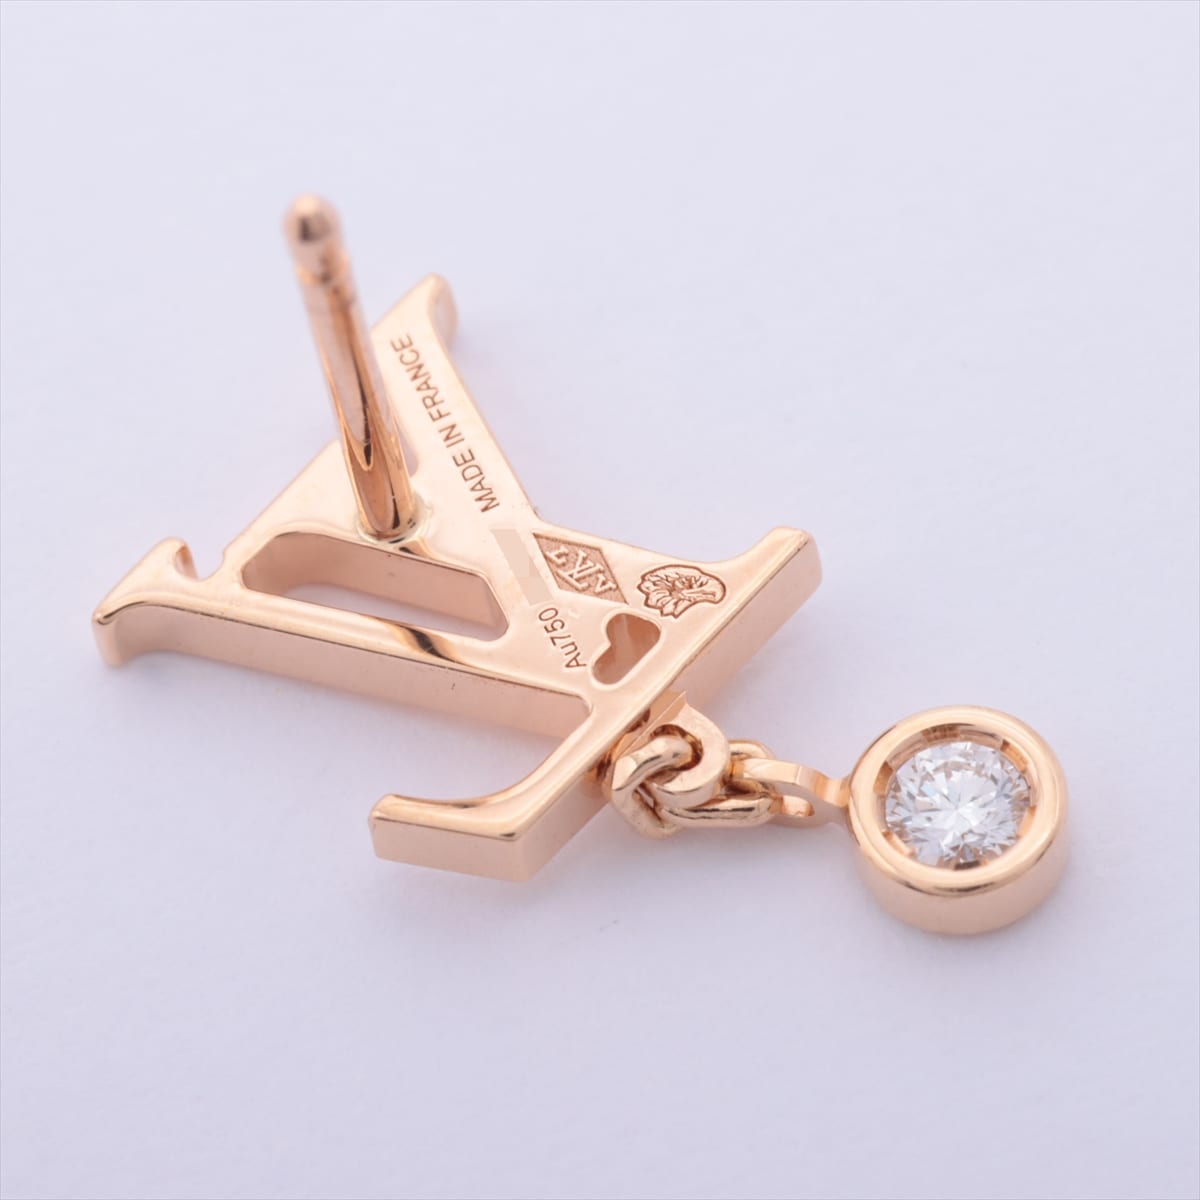 Louis Vuitton Puz Idylle Blossom LV diamond Piercing jewelry 750(PG) 2.1g